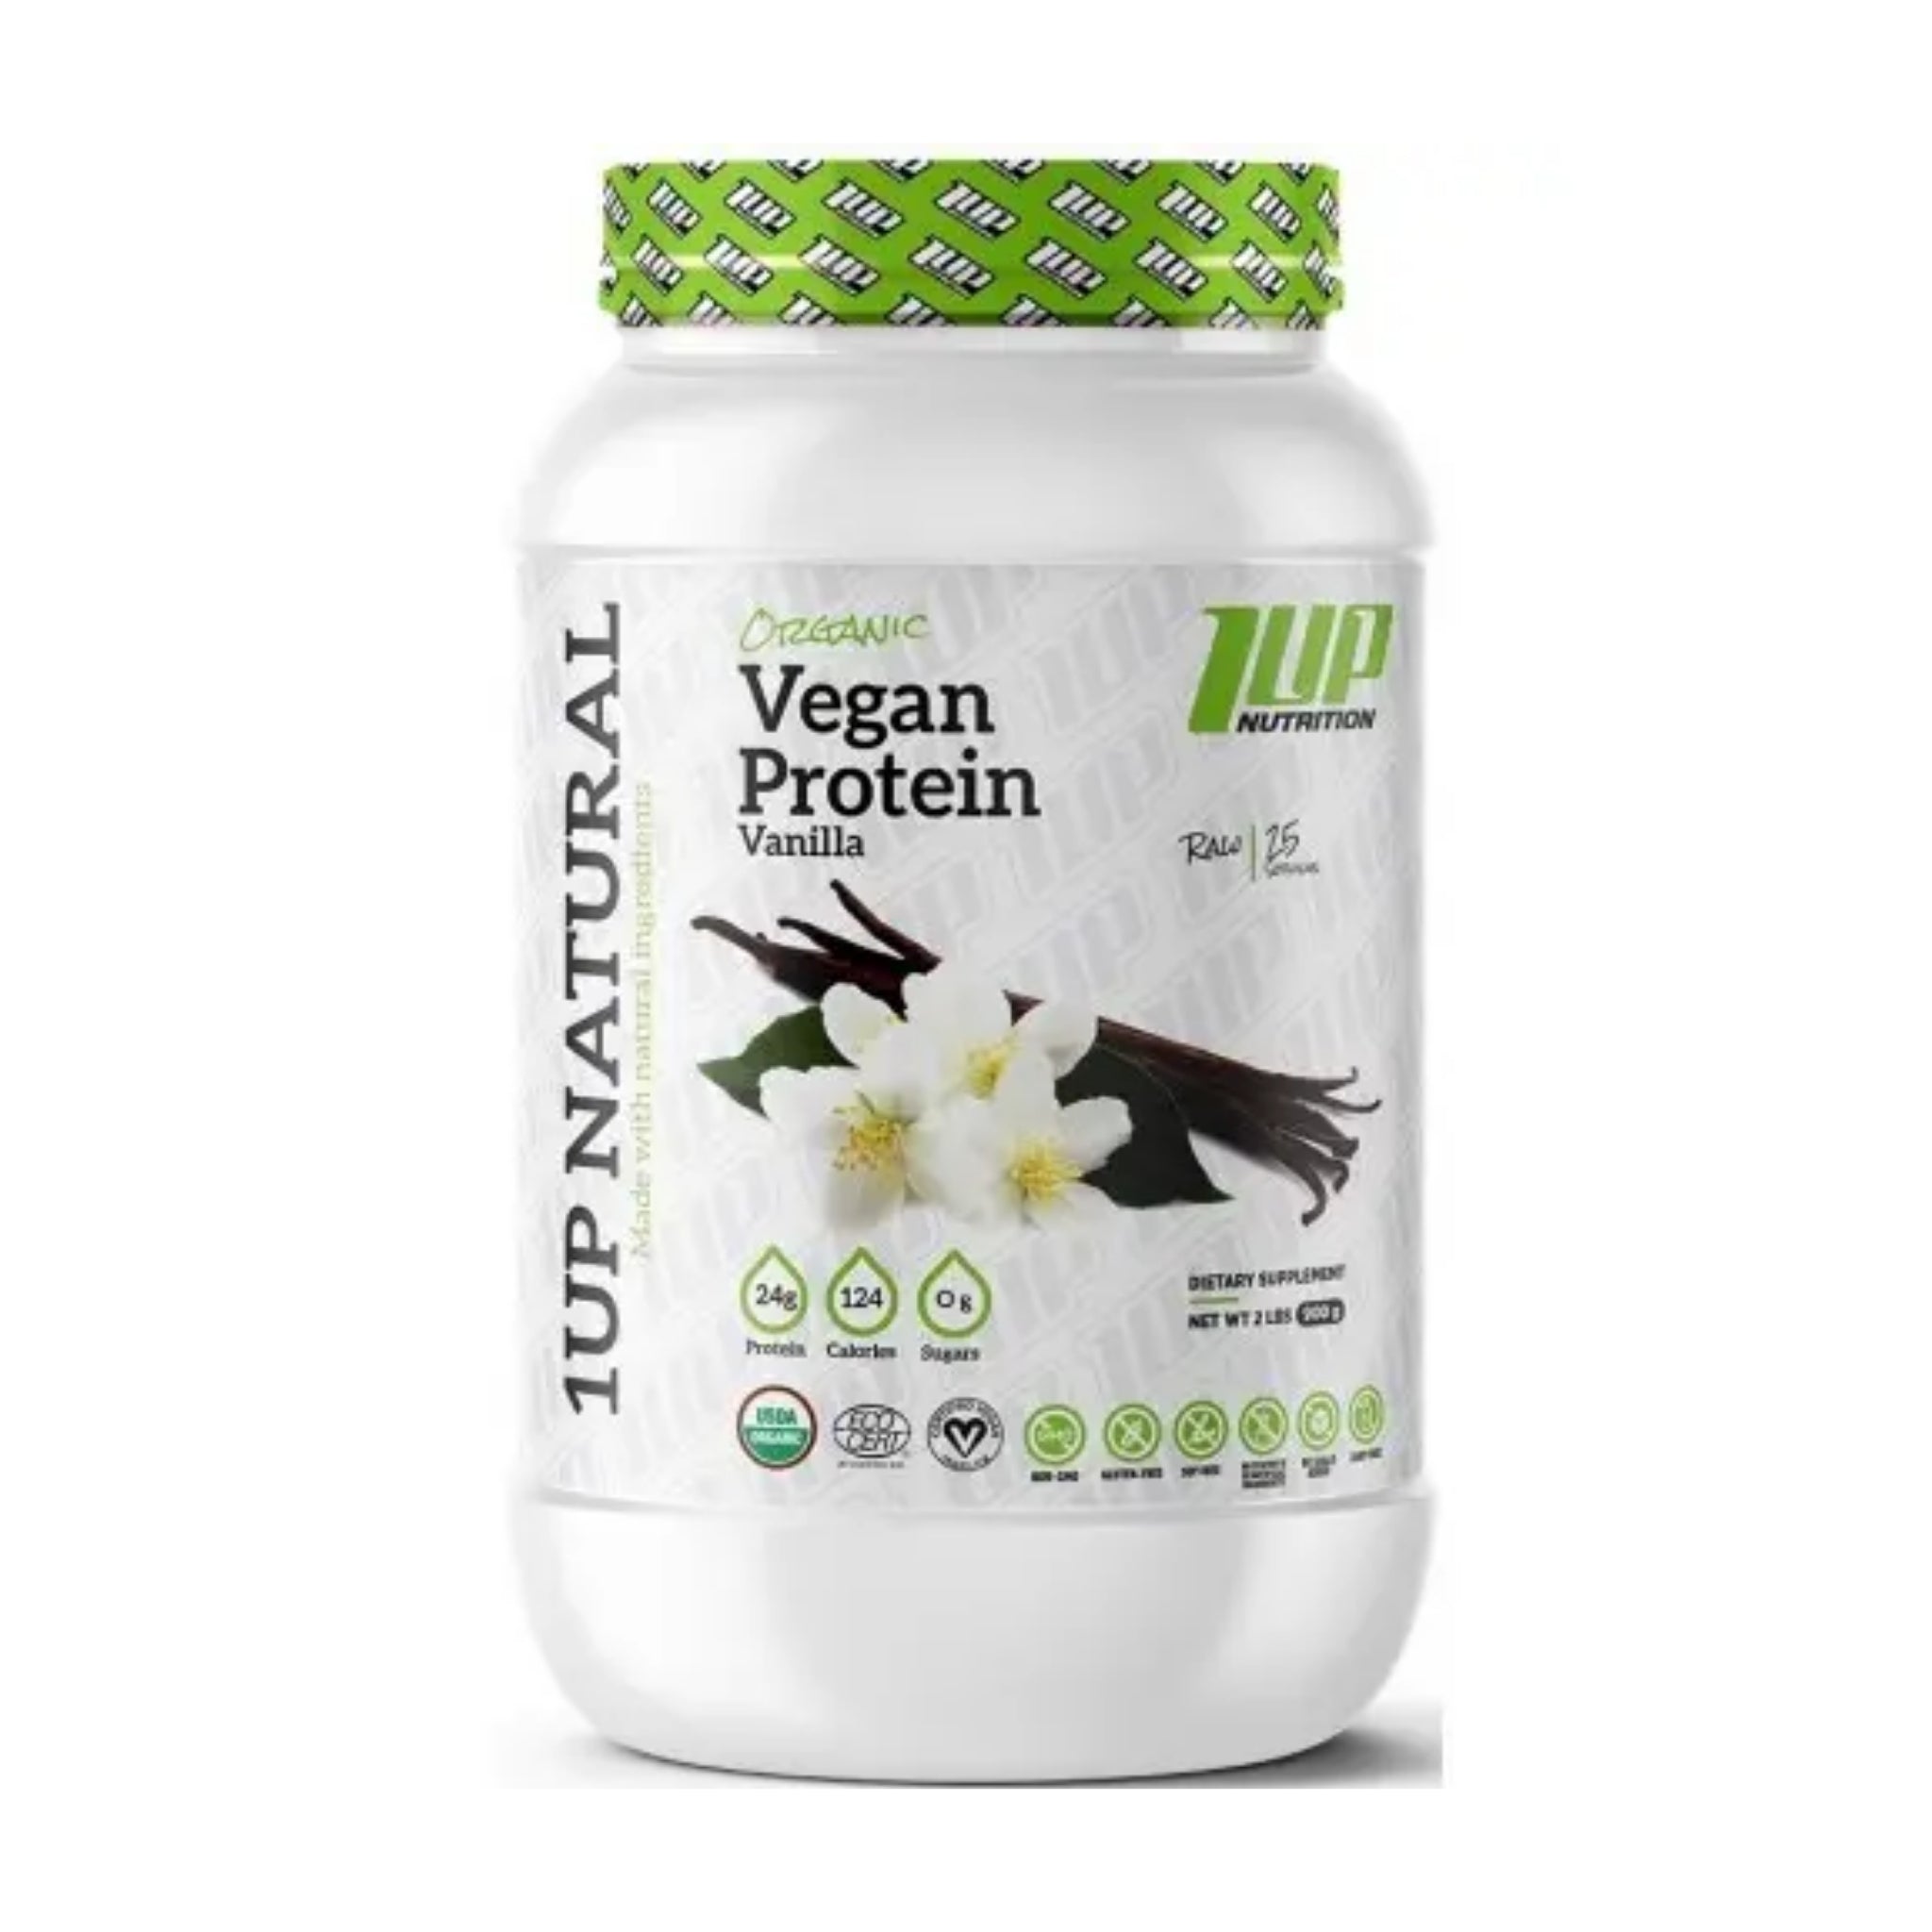 1Up Nutrition Organic Vegan Protein